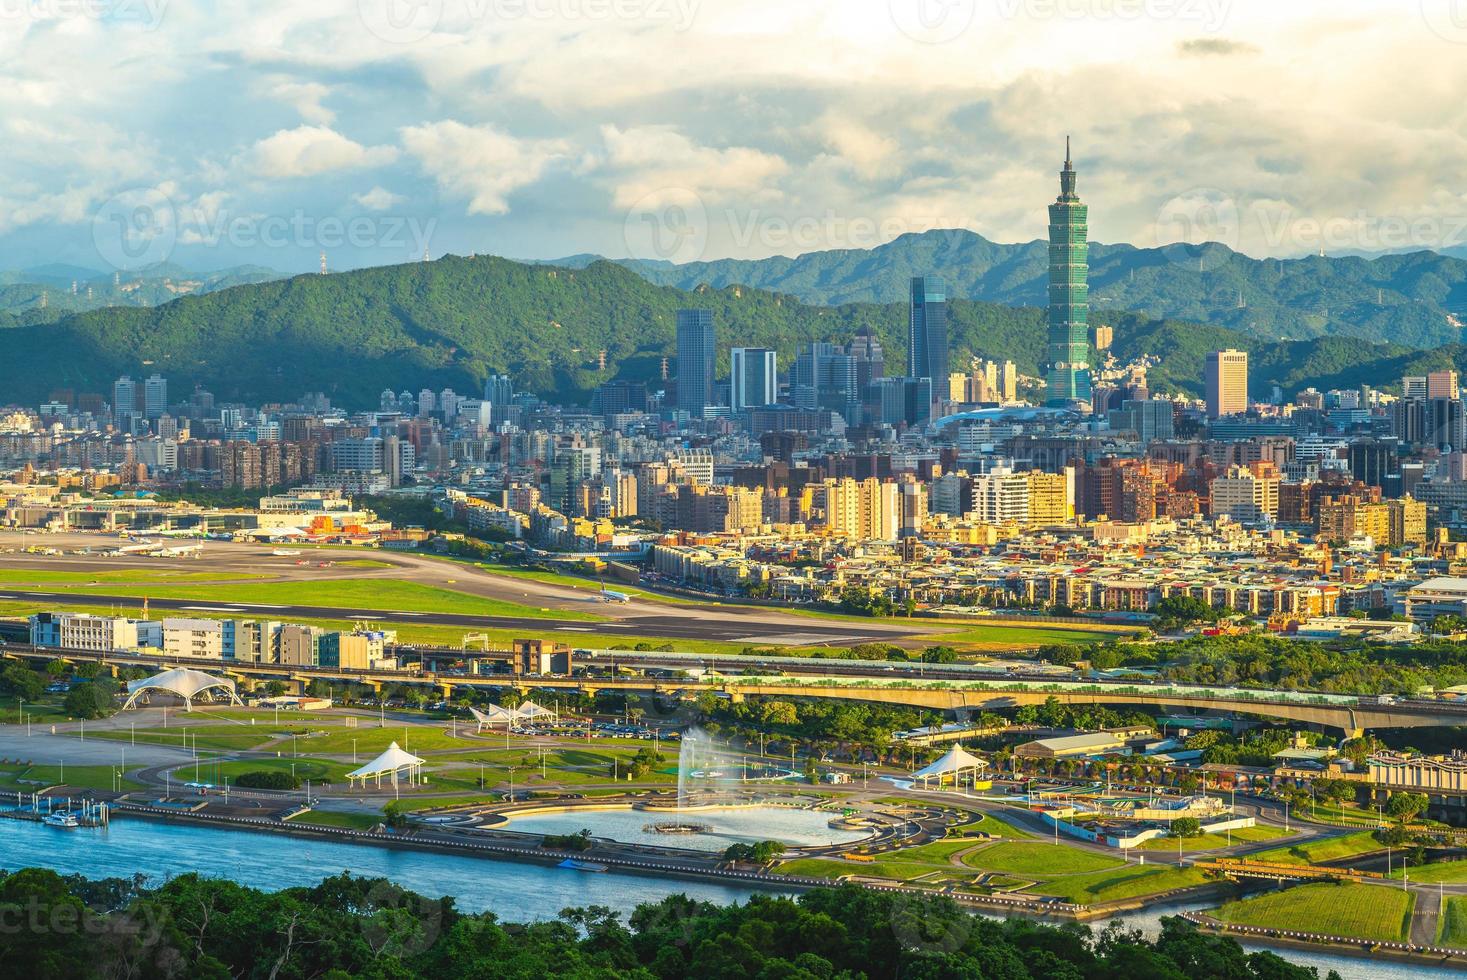 Panoramablick auf die Stadt Taipeh in Taiwan foto